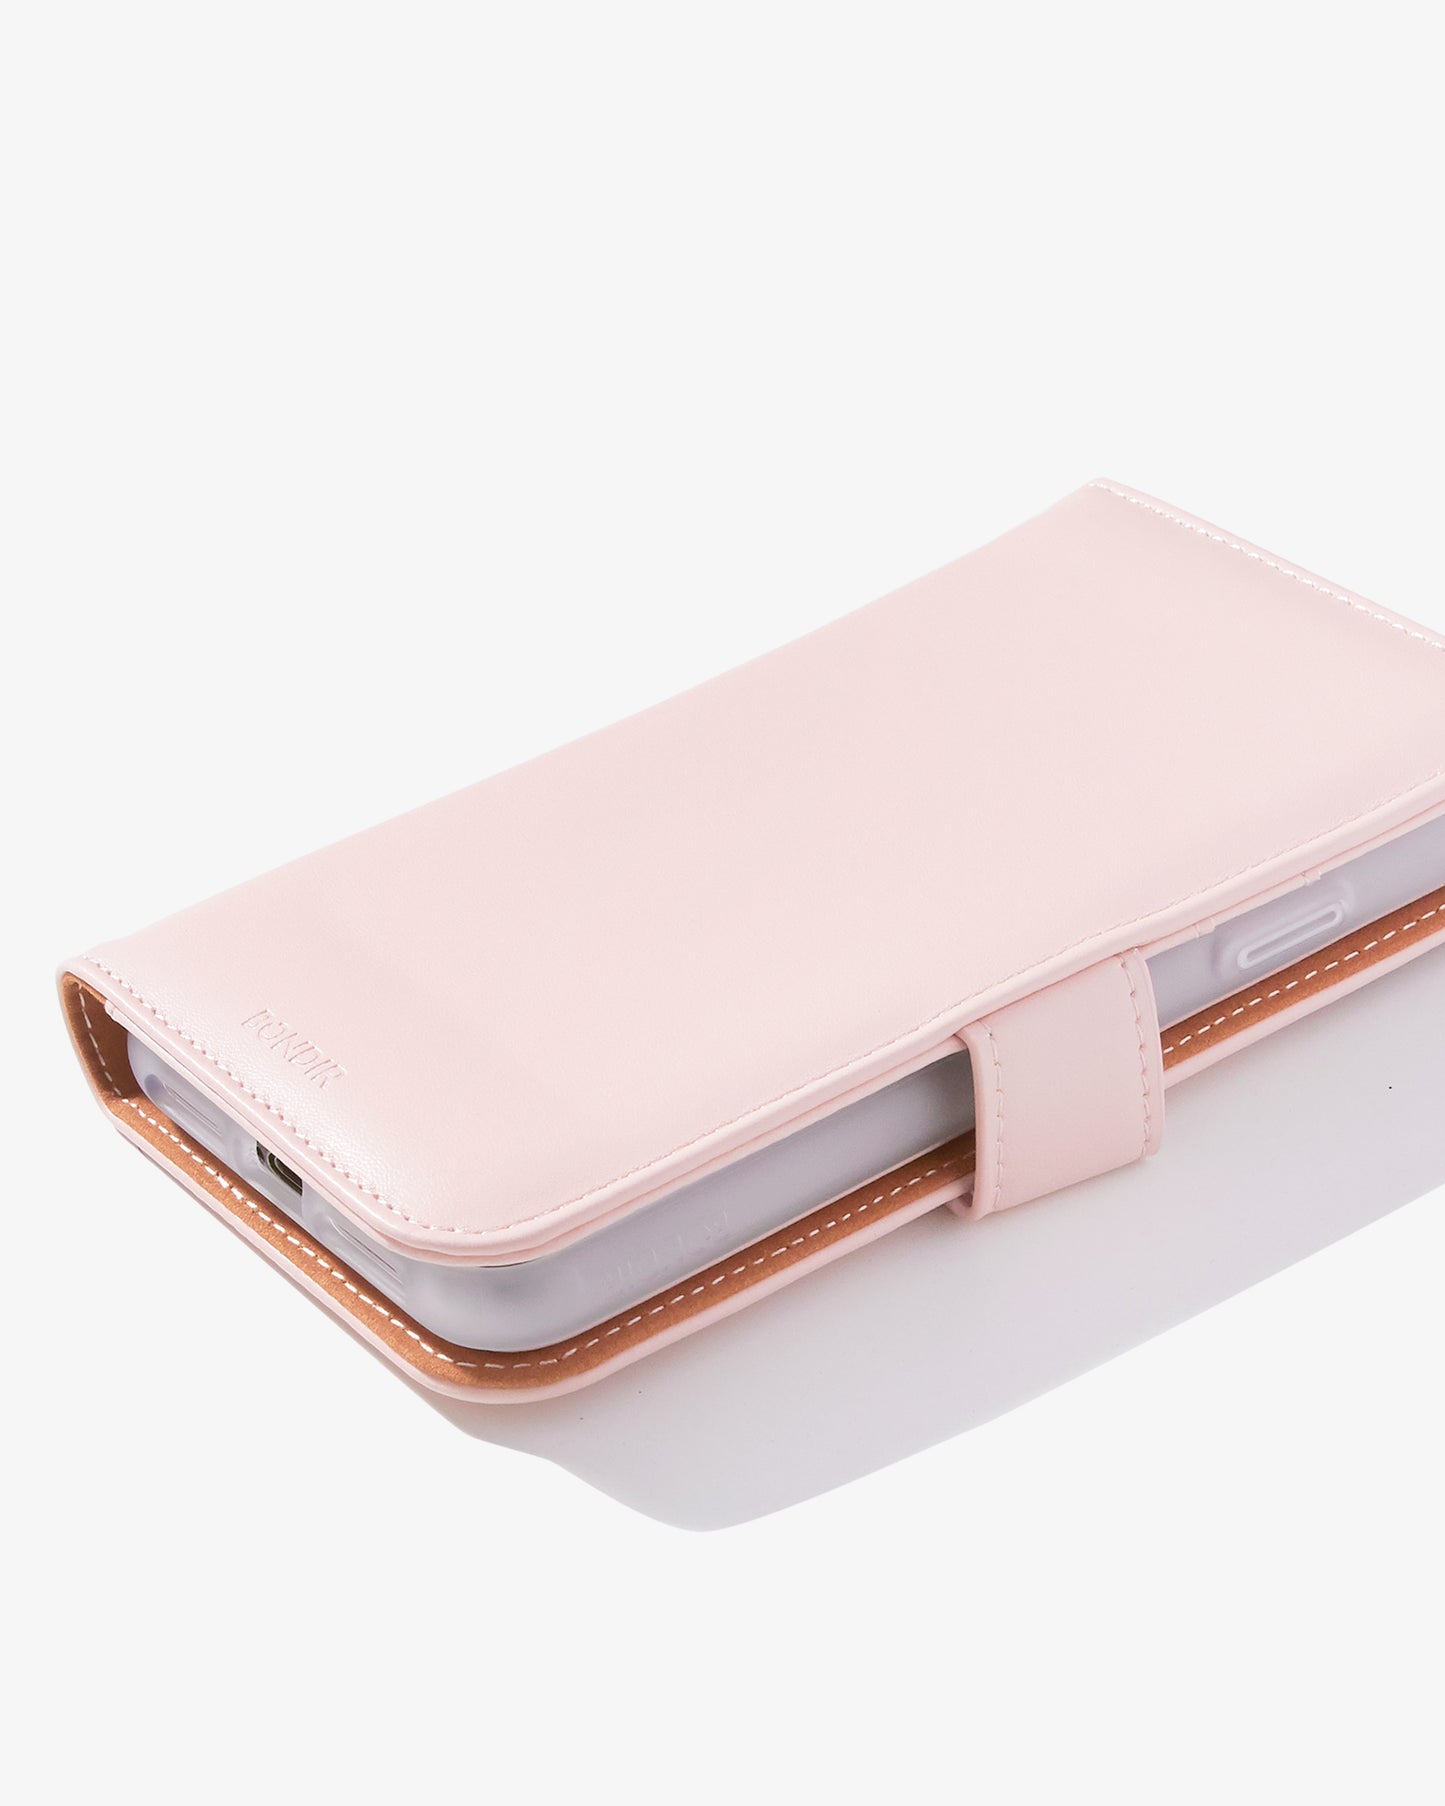 BONDIR Folio Case - Pink, iPhone 11 Pro / XS /X